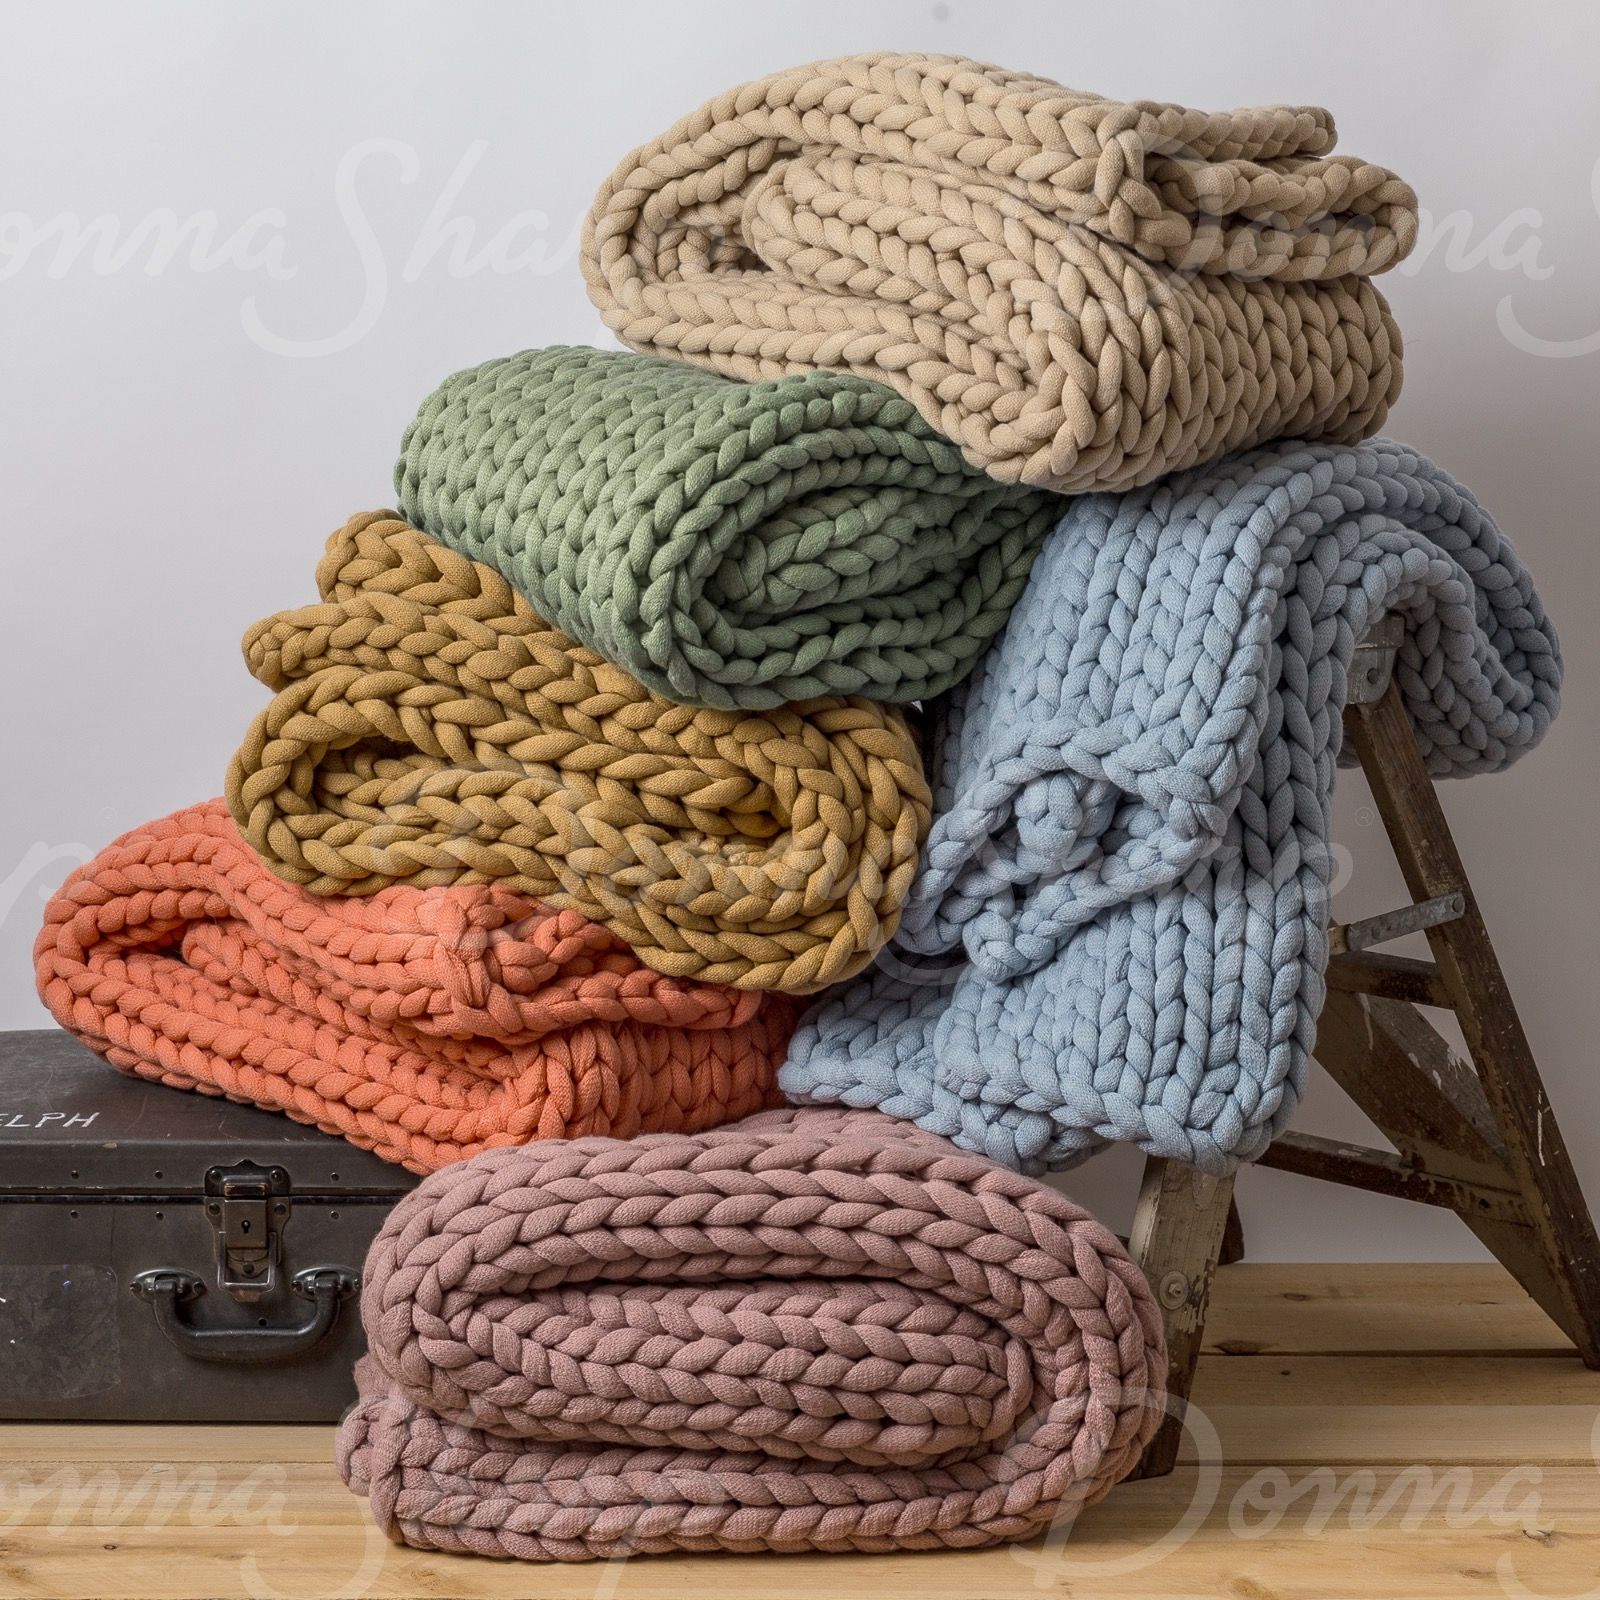 Arm knitting yarns: best super chunky wools and yarns - Gathered